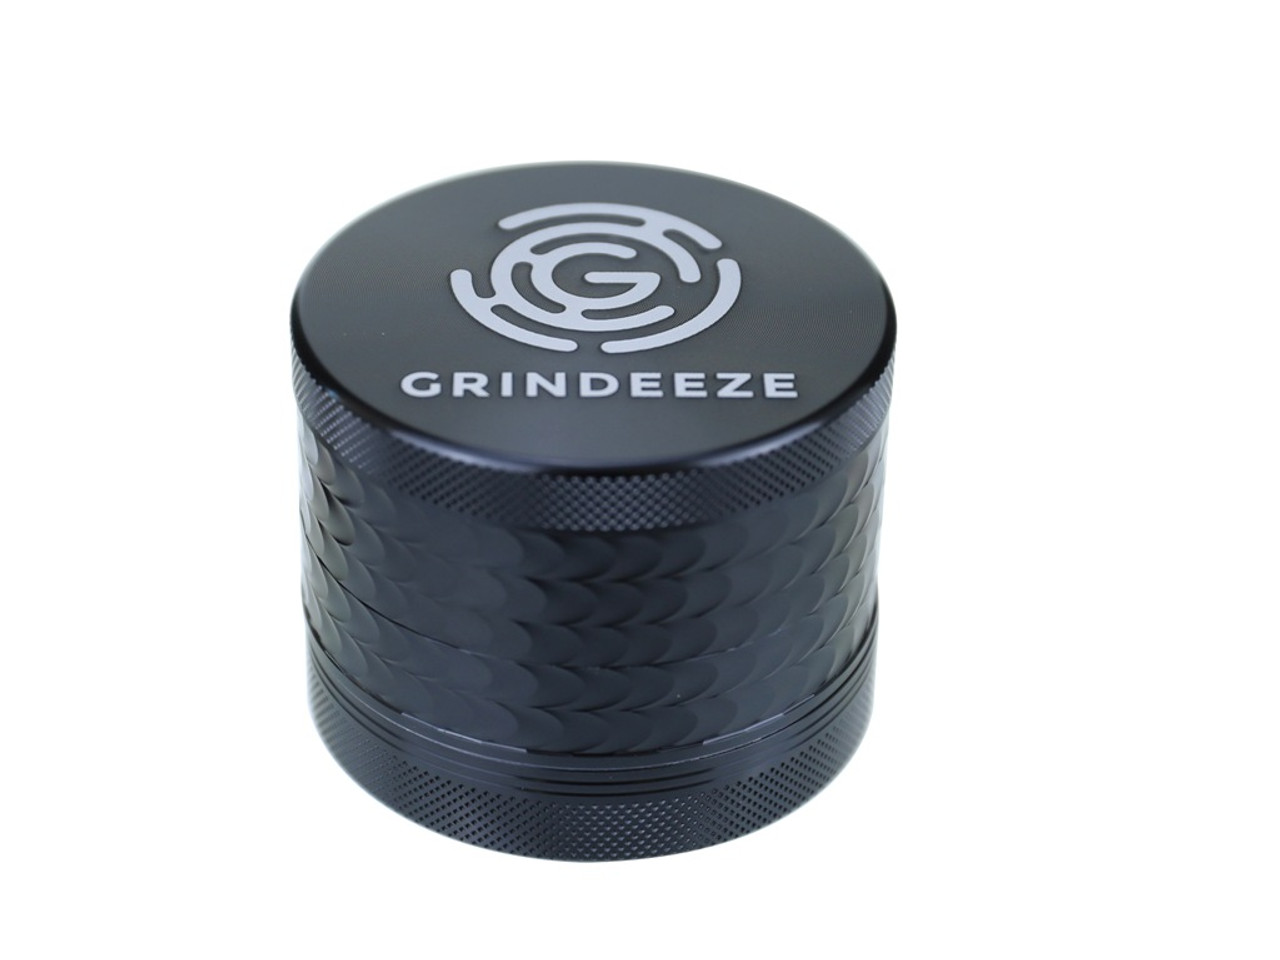 Grind Eeze 63mm Grinder with Bear Design - Assorted Colors